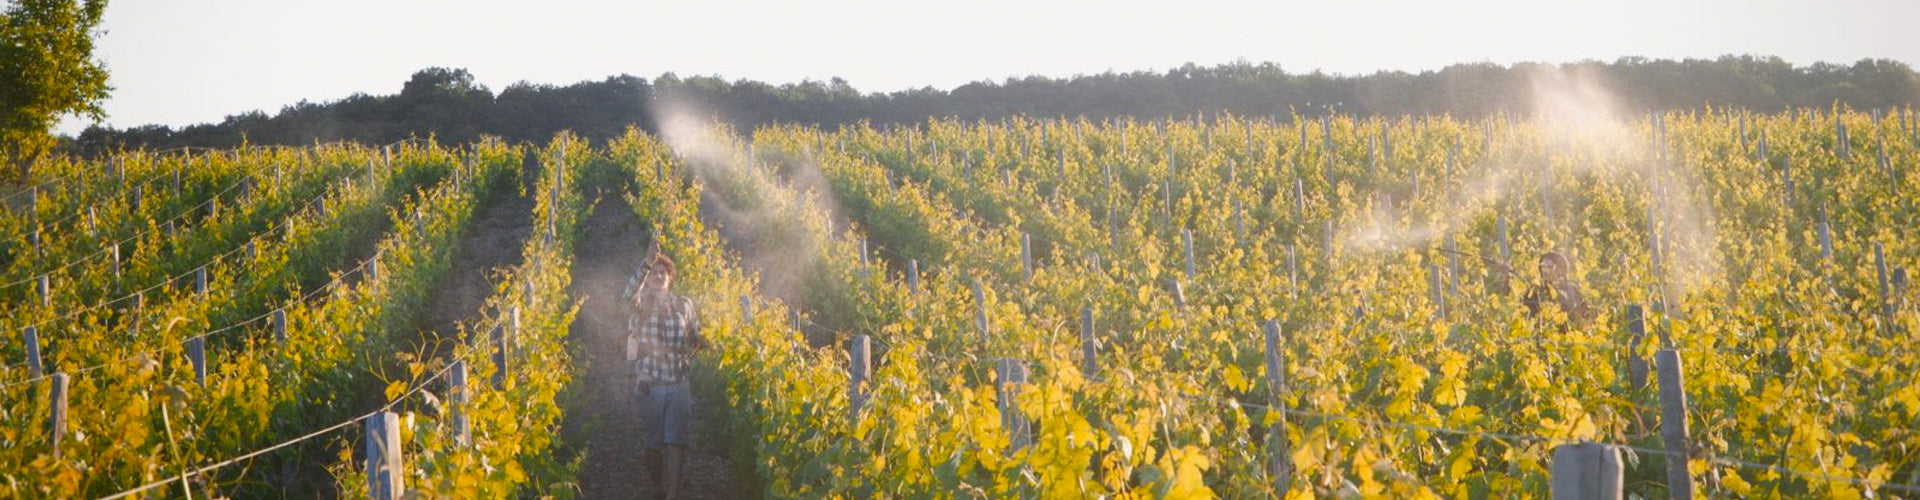 Biodynamic spray preparation appliued to vines at Domaine Grosbois